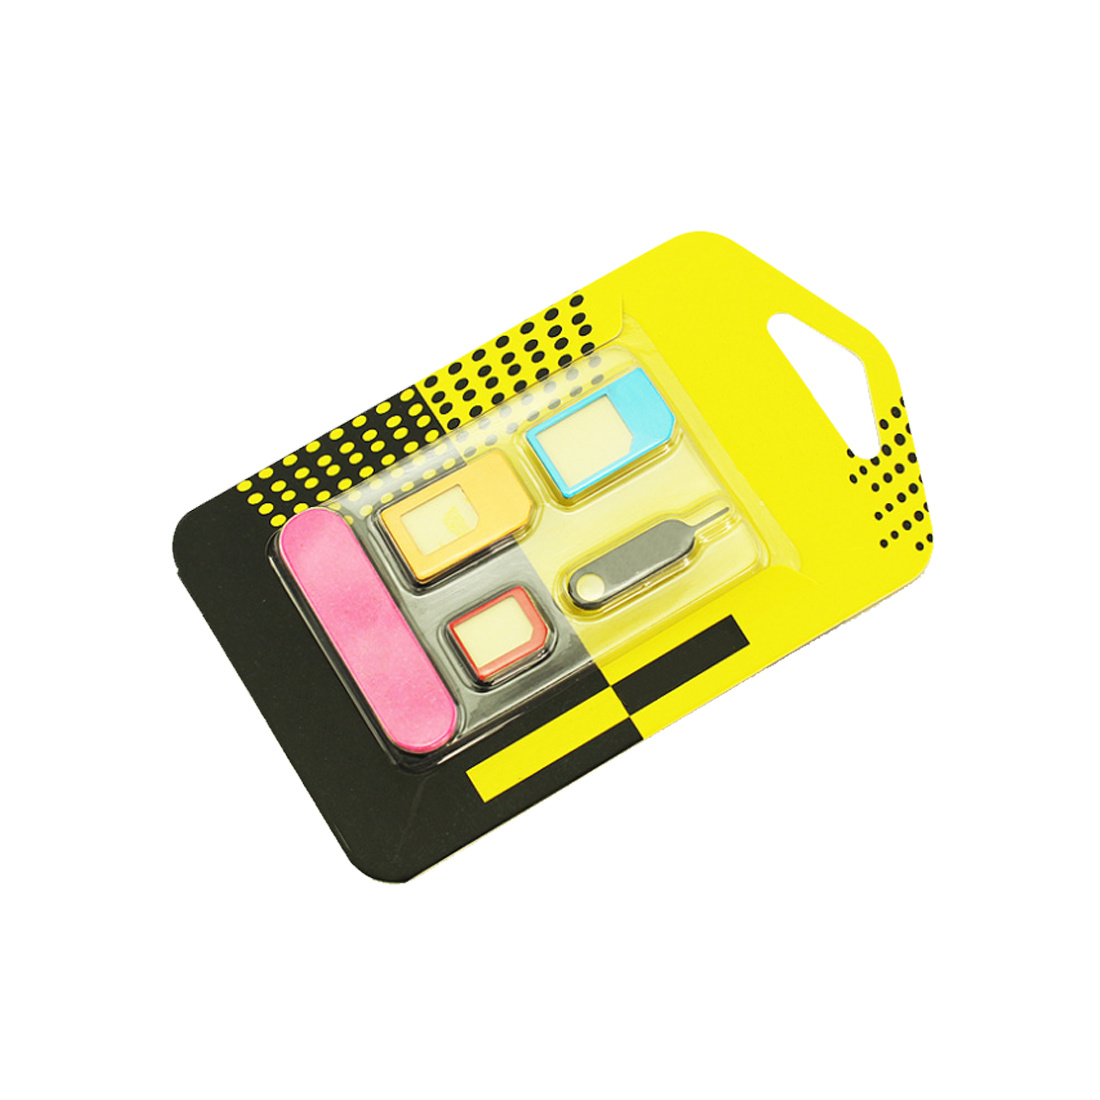 Etmakit 5 in 1 nano sim-kort adaptere + almindelig & micro sim + standard sim-kort & værktøjer til iphone 4 4s 5 5c 5s 6 6s detailboks